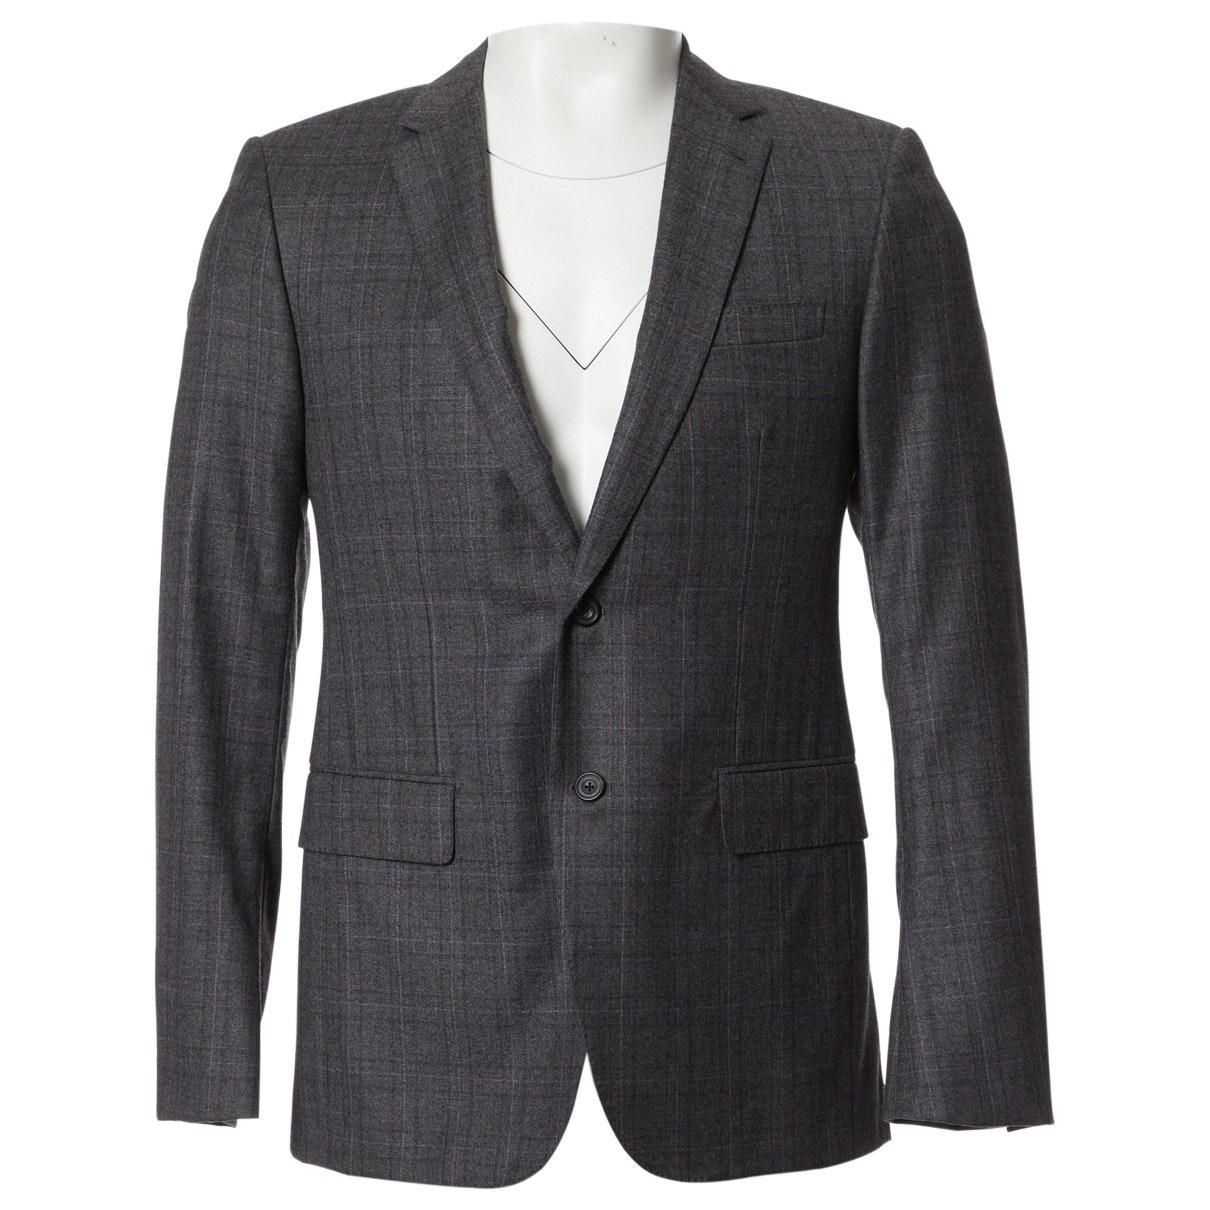 Louis Vuitton Wool Jacket in Grey (Gray) for Men - Lyst